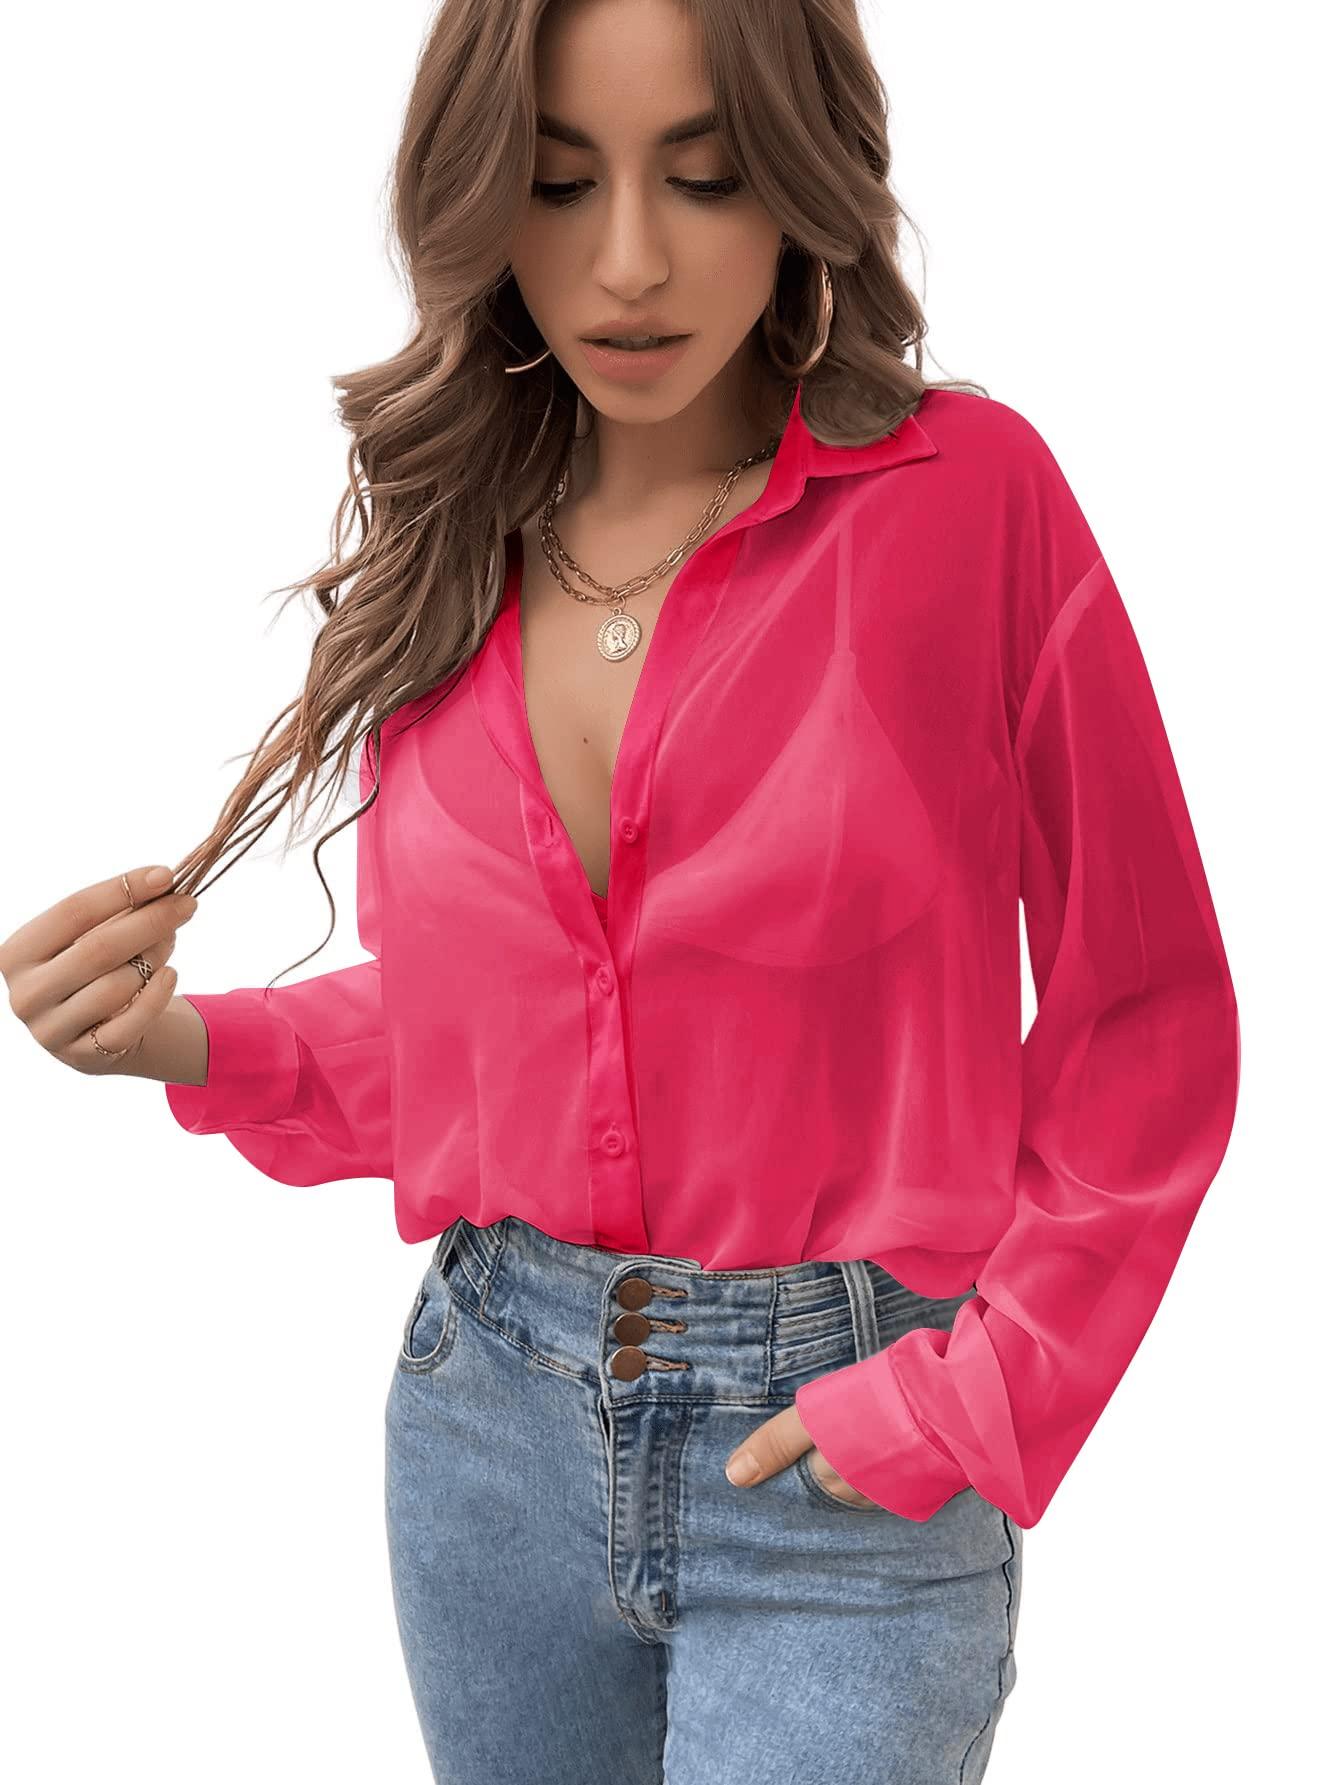 Verdusa Womens Sheer Mesh Button Down Shirt Top Long Sleeve Drop Shoulder Blouse Hot Pink M